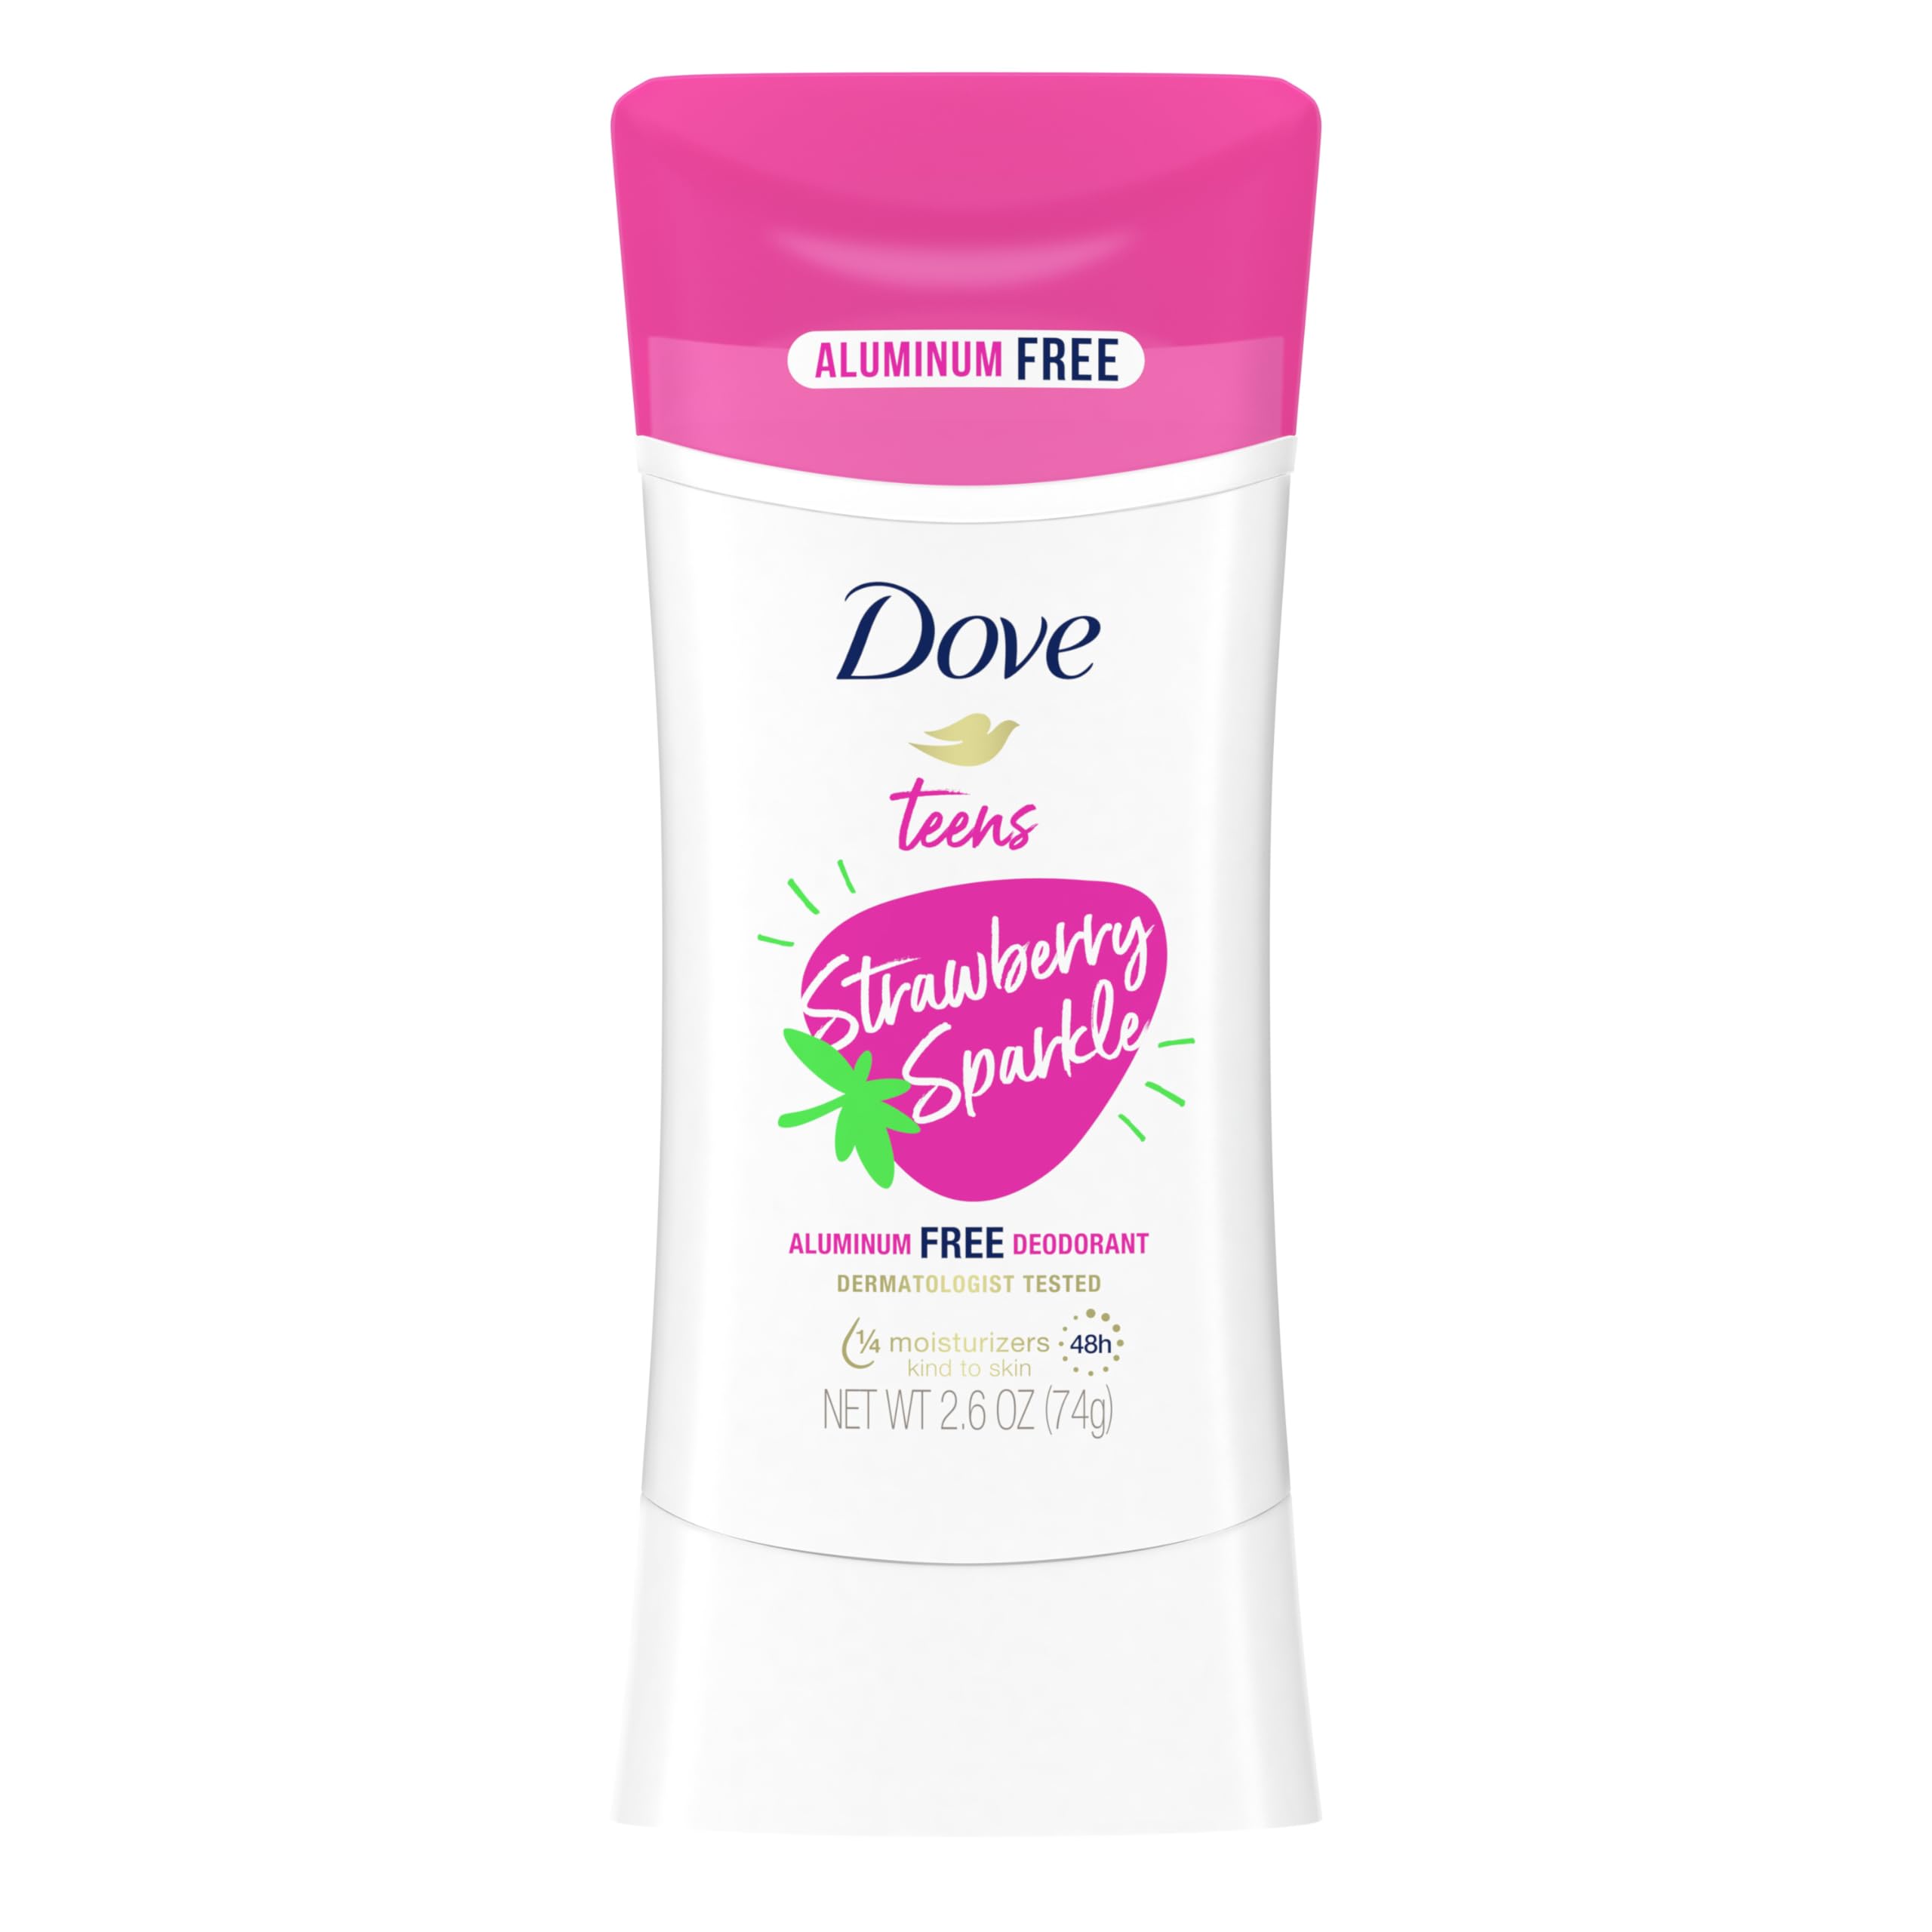 Dove Teens Deodorant Stick Strawberry Sparkle, for gentle underarm care, 48-hour odor protection and aluminum free deodorant, 2.6 oz